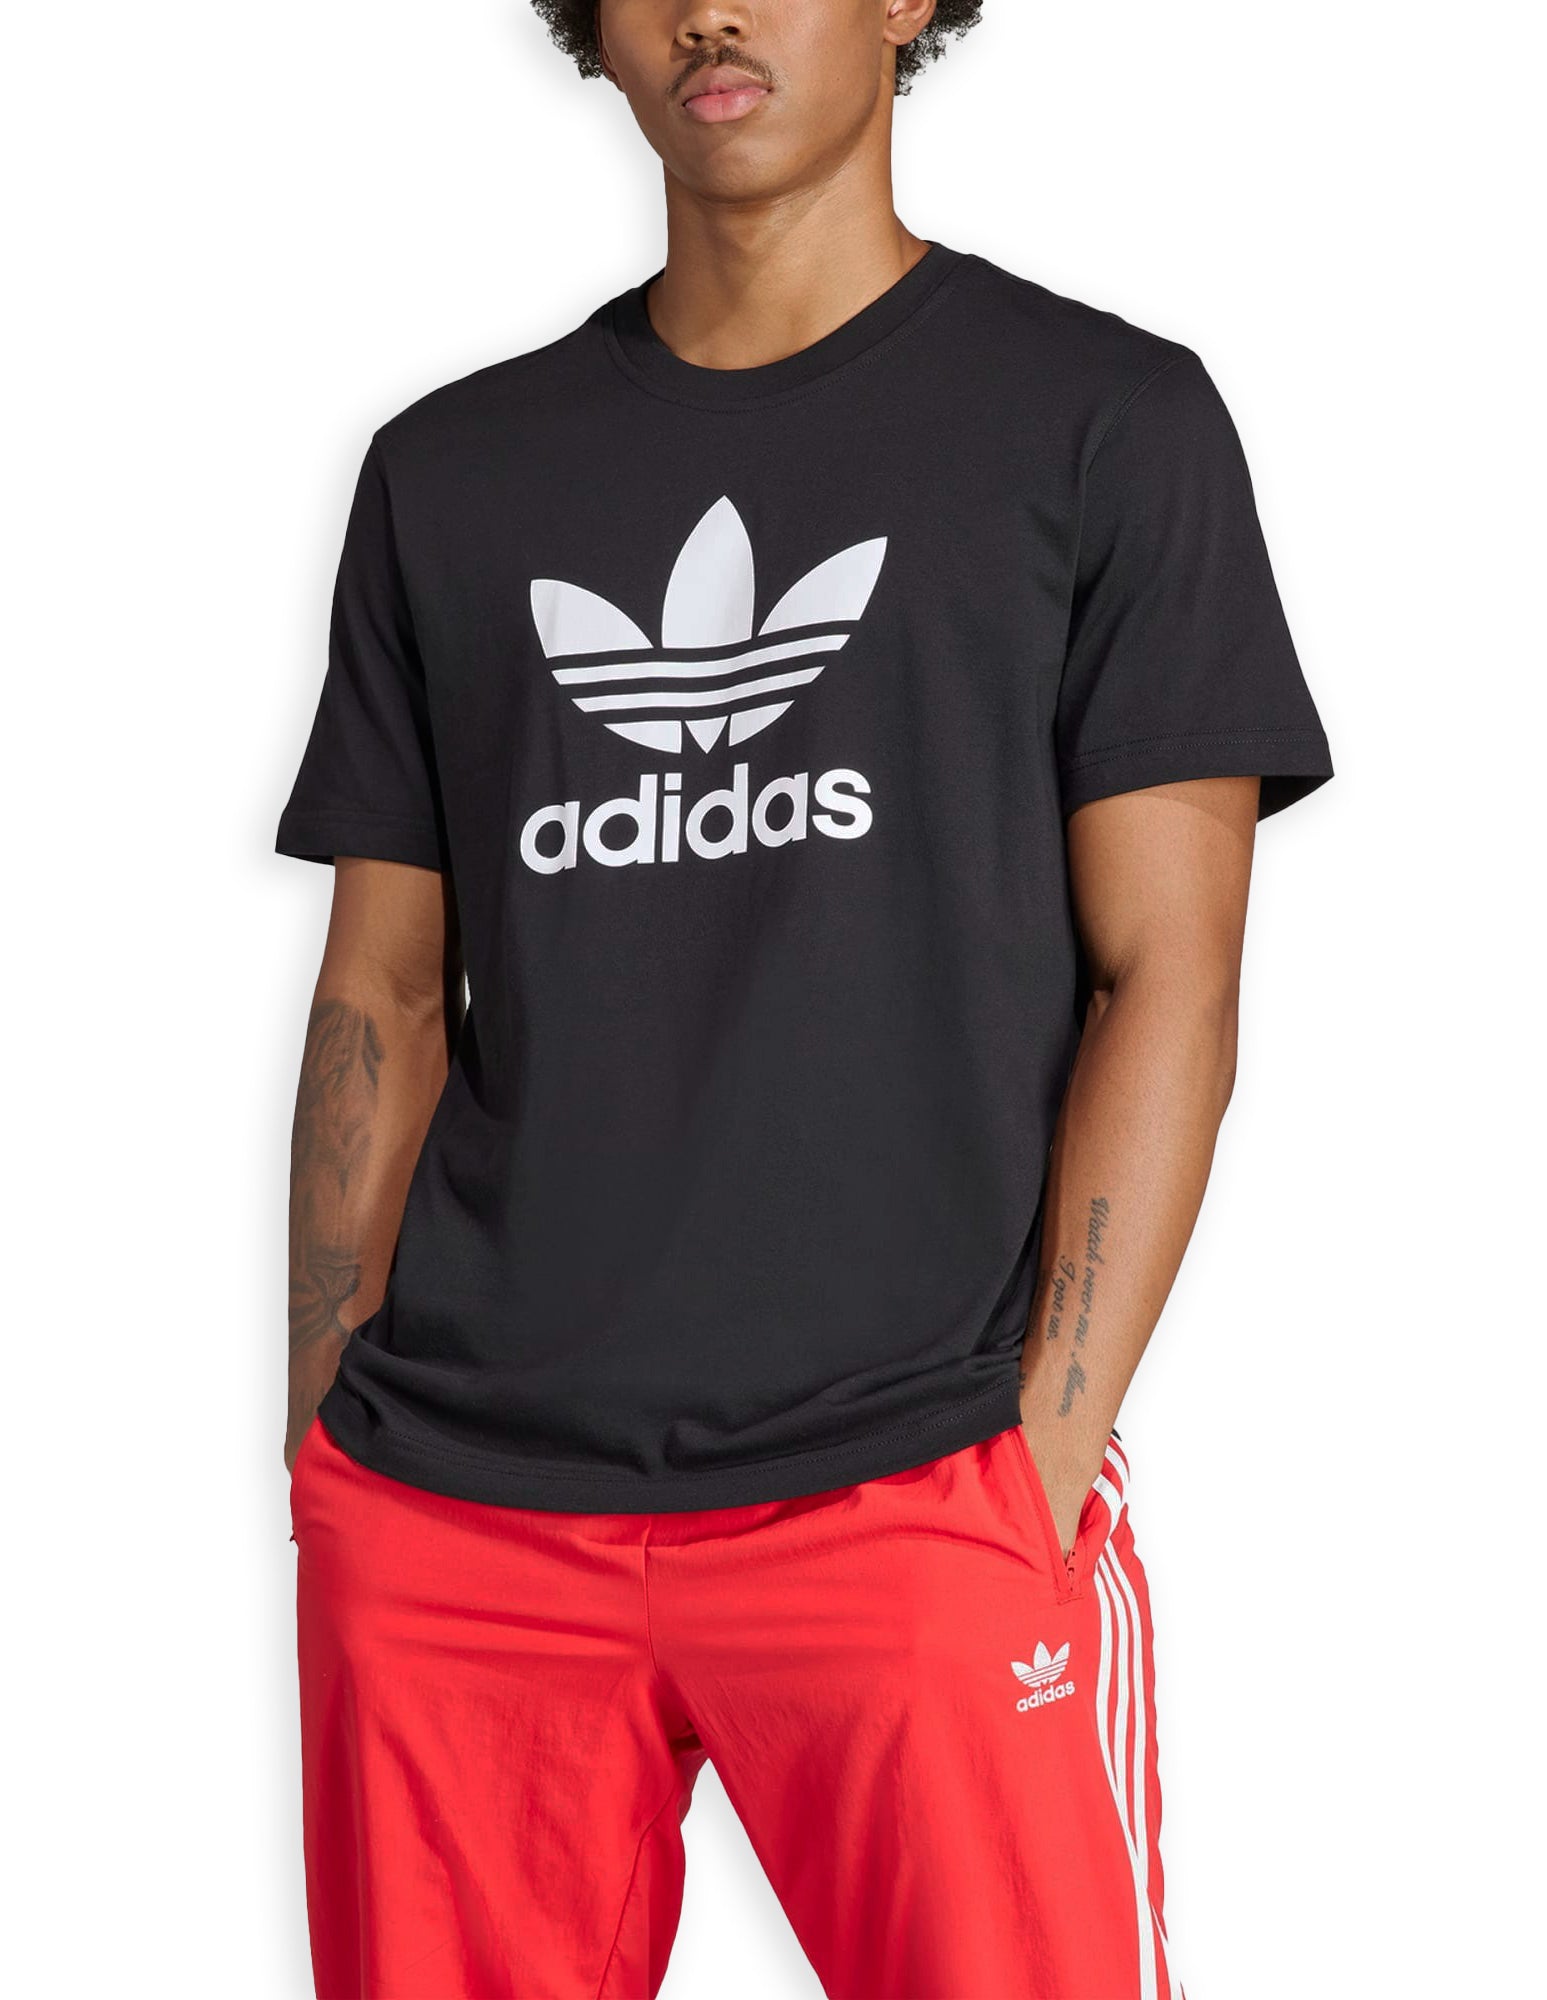 Adidas Trefoil Black Men's T-Shirt